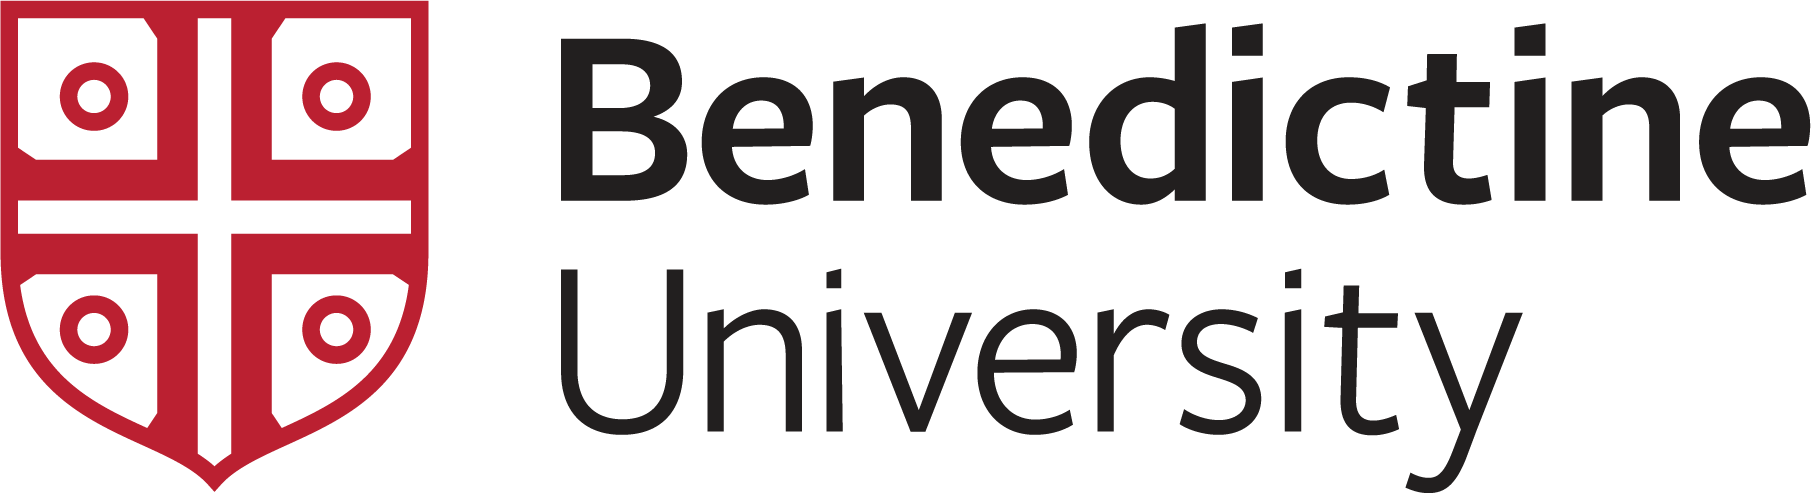 Benedictine University - Main logo